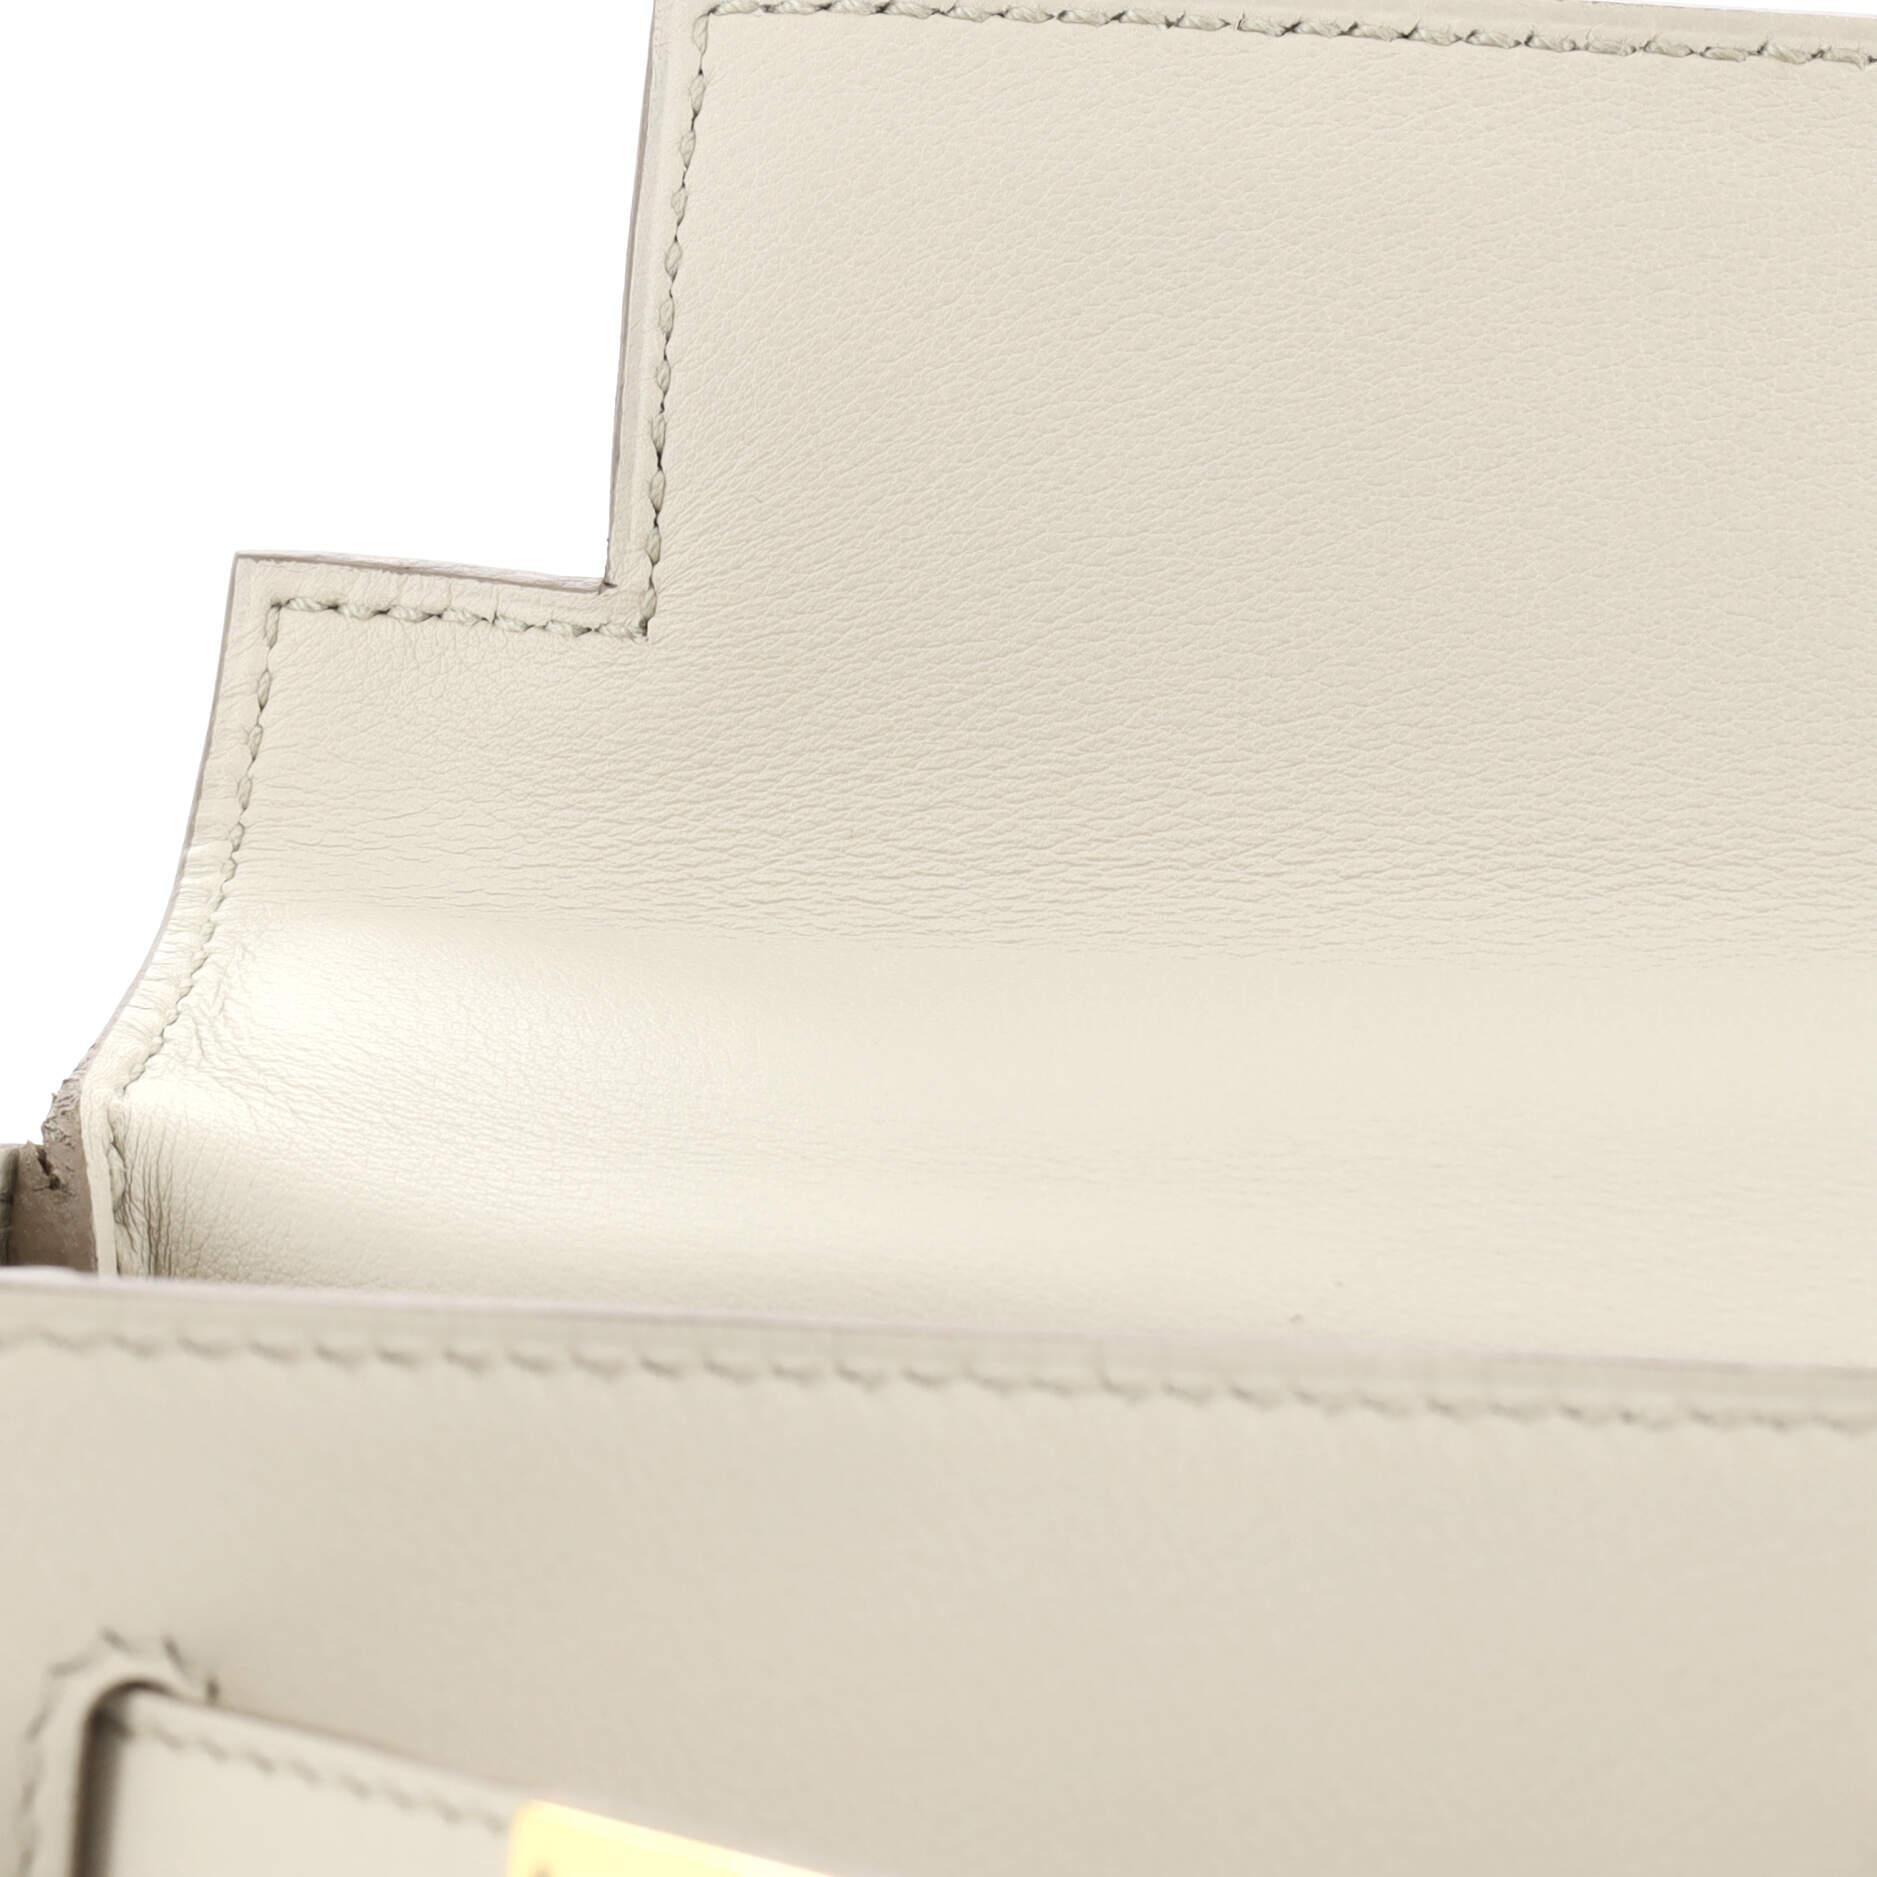 Hermes Kelly Handbag Light Swift with Gold Hardware 25 5